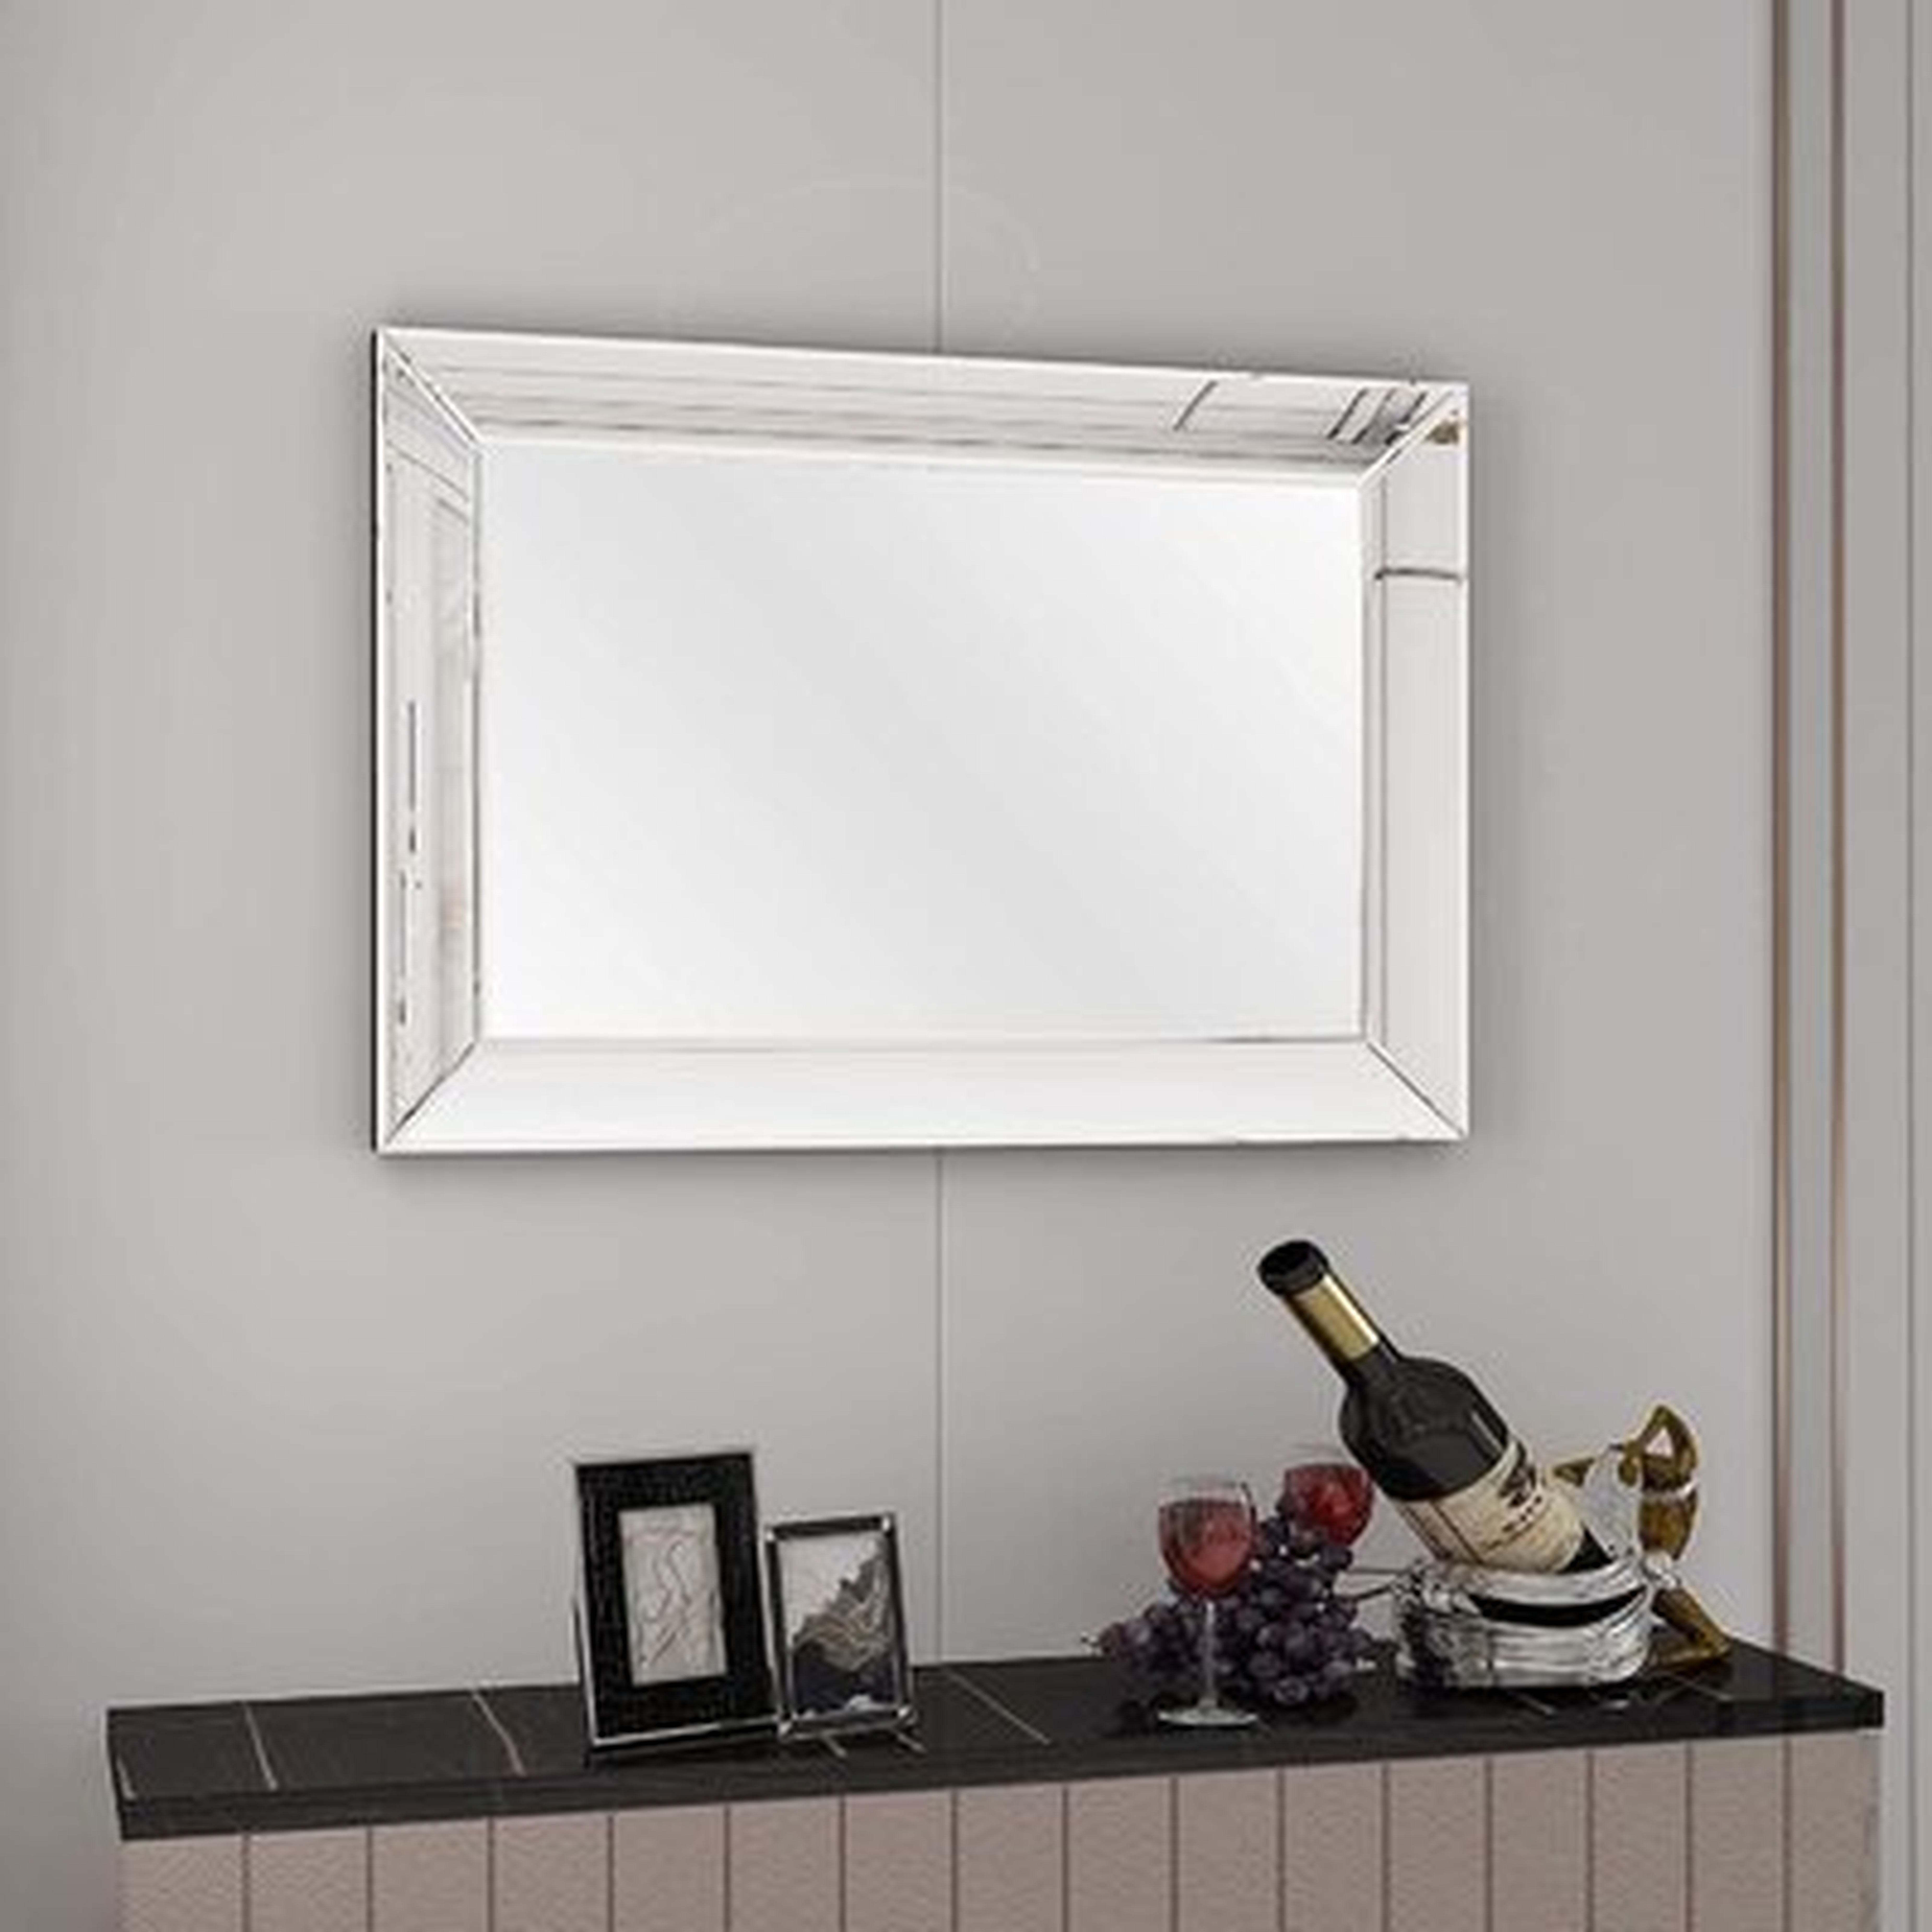 Rectangular Bathroom Wall Mirror 24"X35" - Angled Beveled Mirror Frame For Vanity, Hallway, Living Room Hangs Horizontal Or Vertical - Wayfair